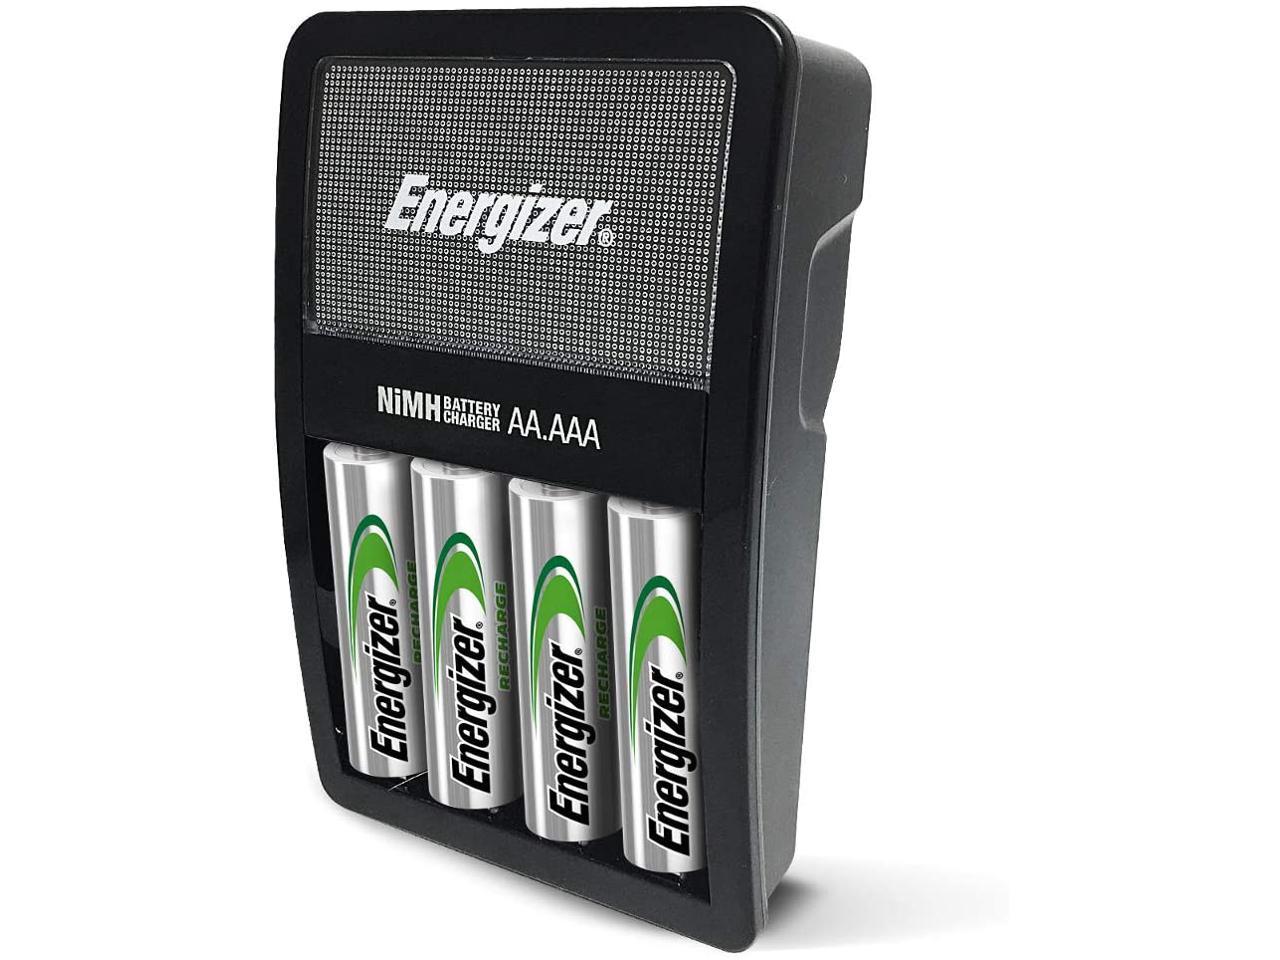 Prediken Toegeven Schouderophalend Energizer Rechargeable AA and AAA Battery Charger with 4 AA NiMH  Rechargeable Batteries - Newegg.com